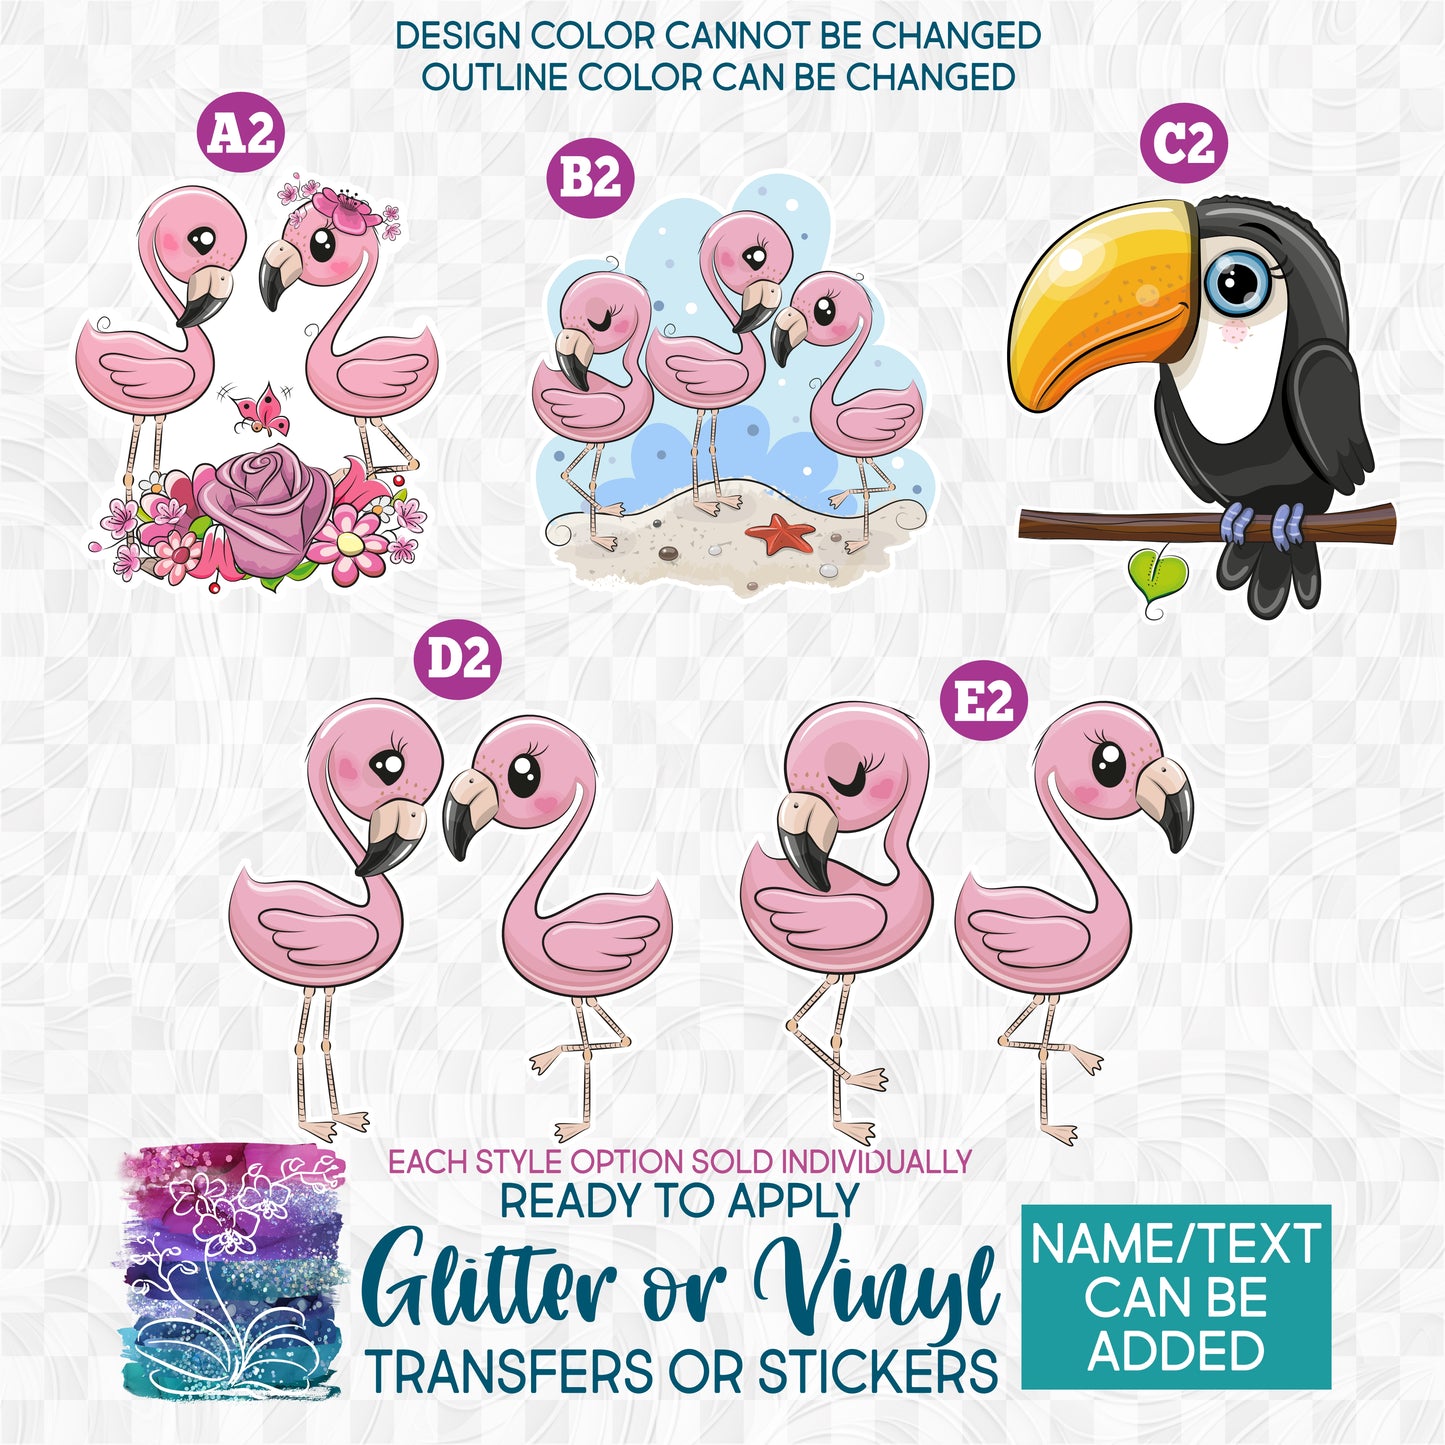 (s133-F) Cute Flamingo Toucan Bird Glitter or Vinyl Iron-On Transfer or Sticker